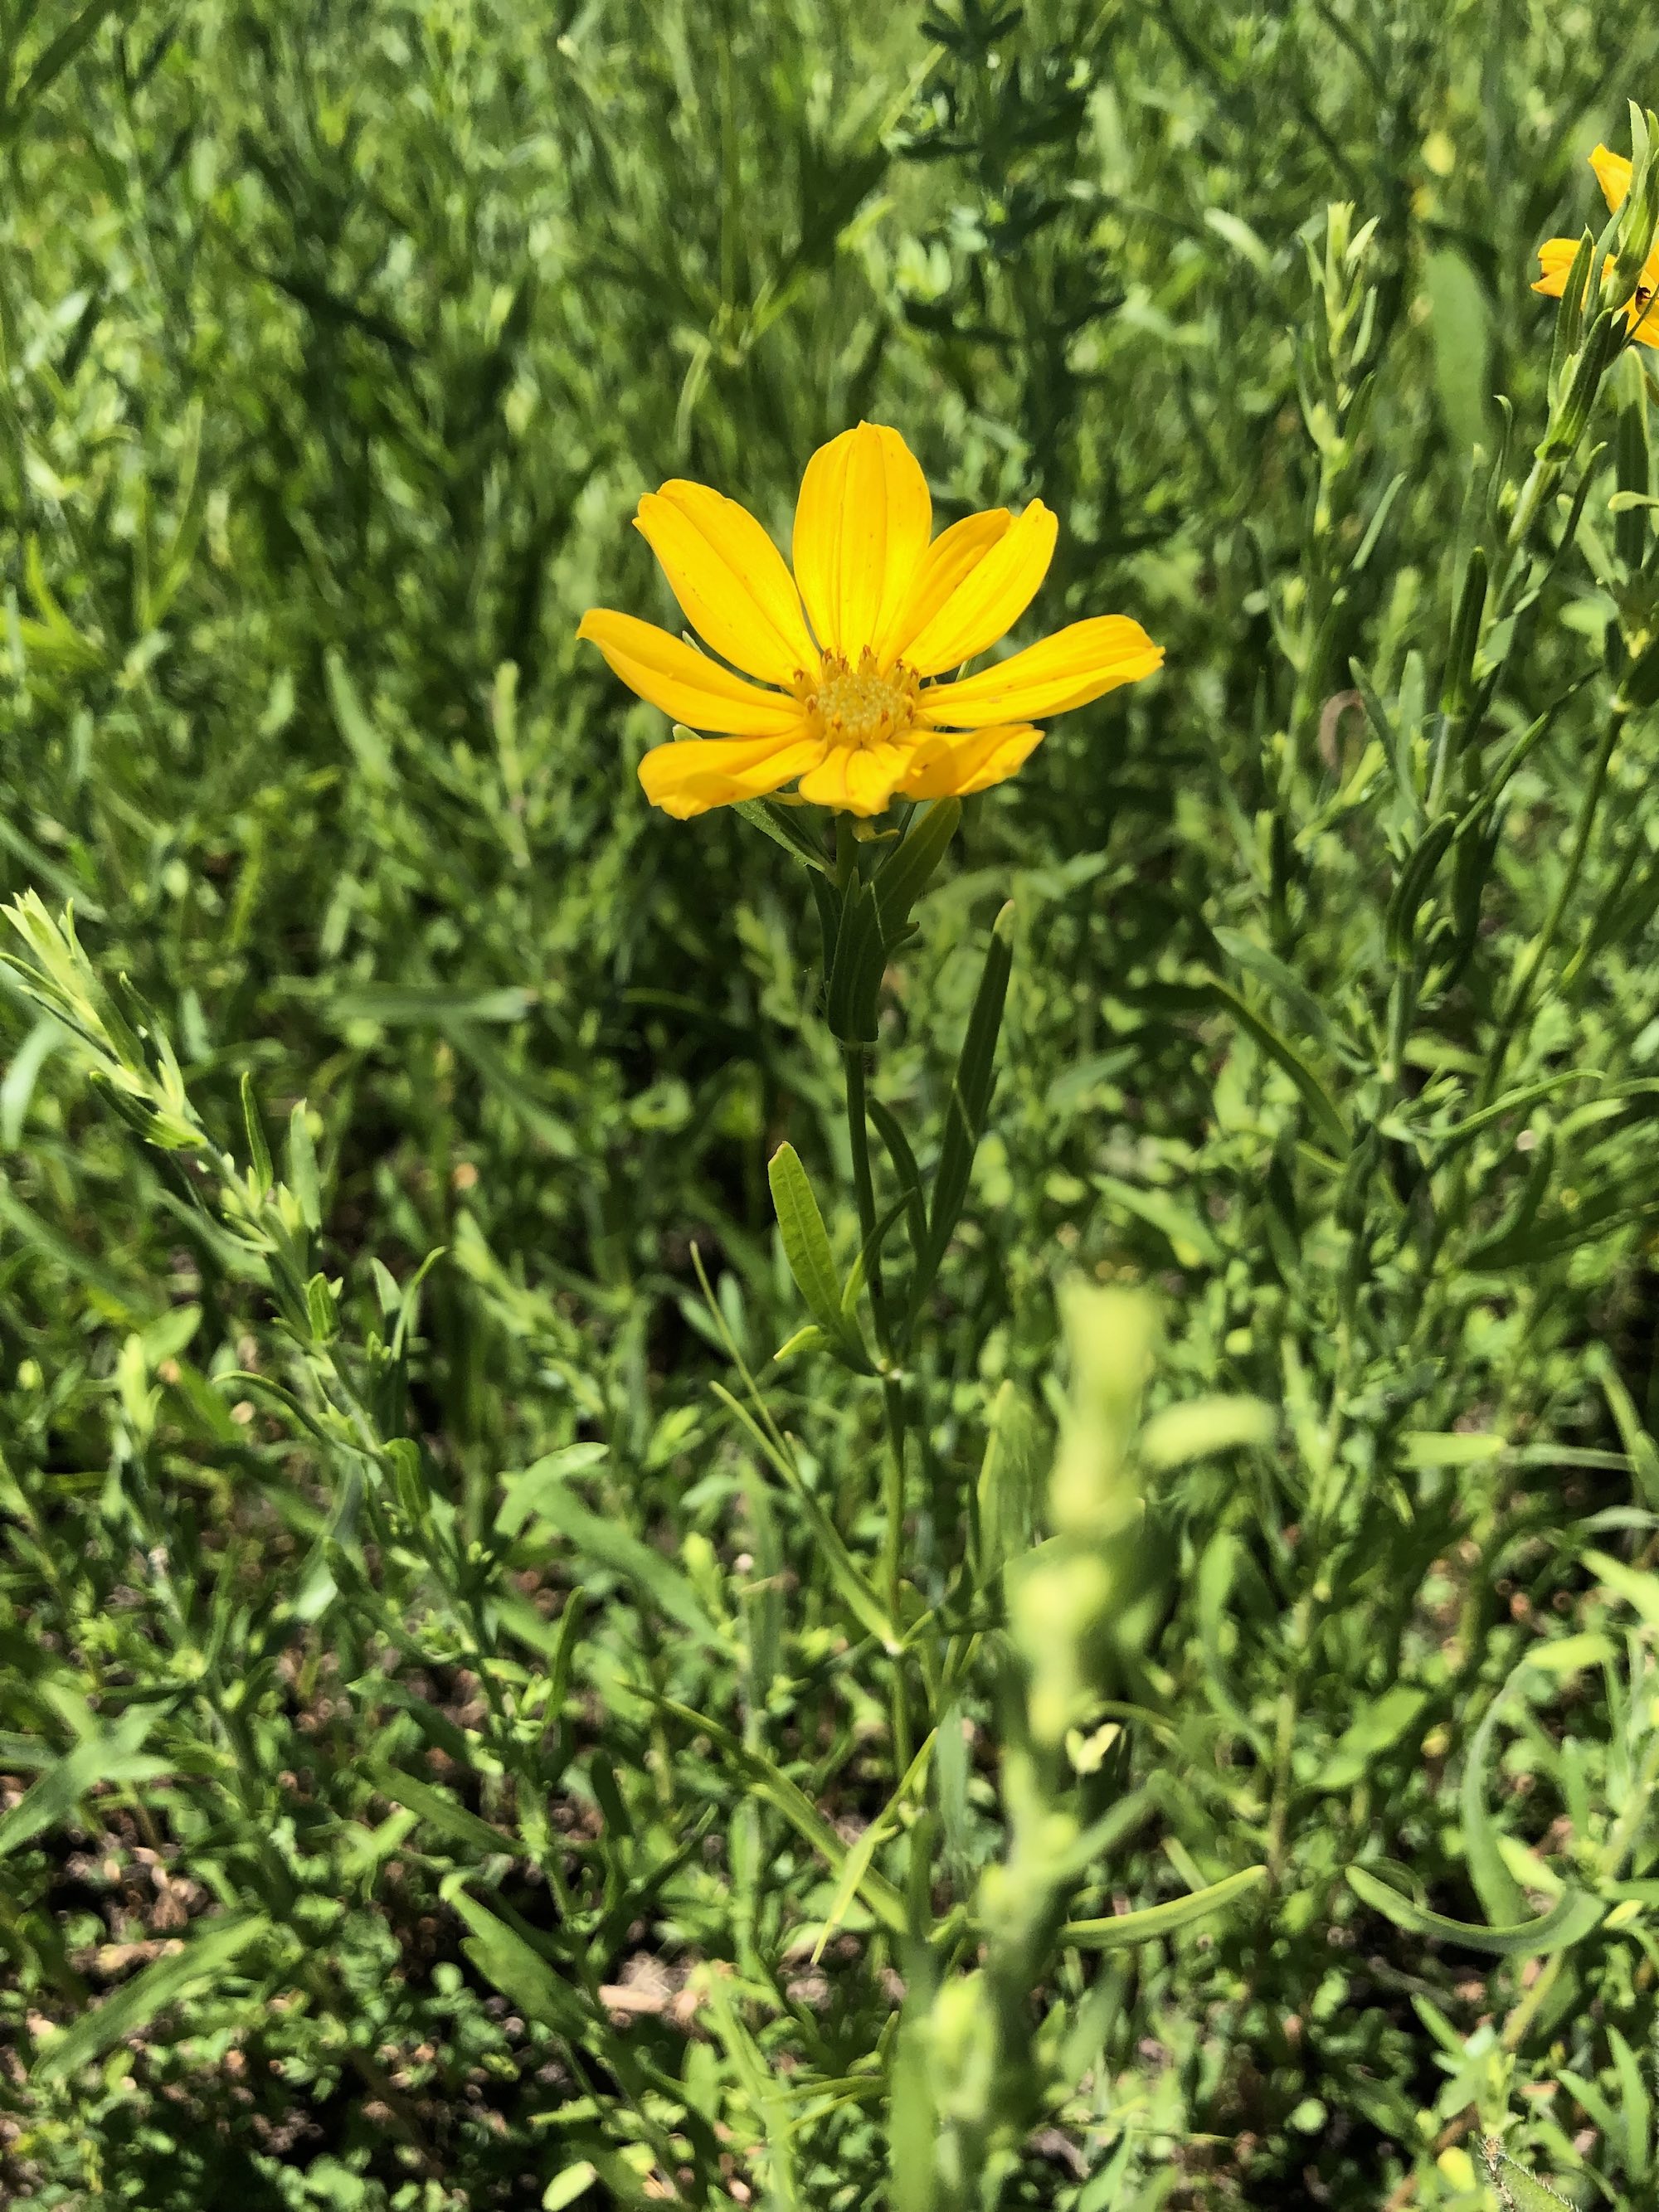 Prairie Coreopsis in UW Arboretum near Visitors Center in Madison, Wisconsin on June 19, 2021.